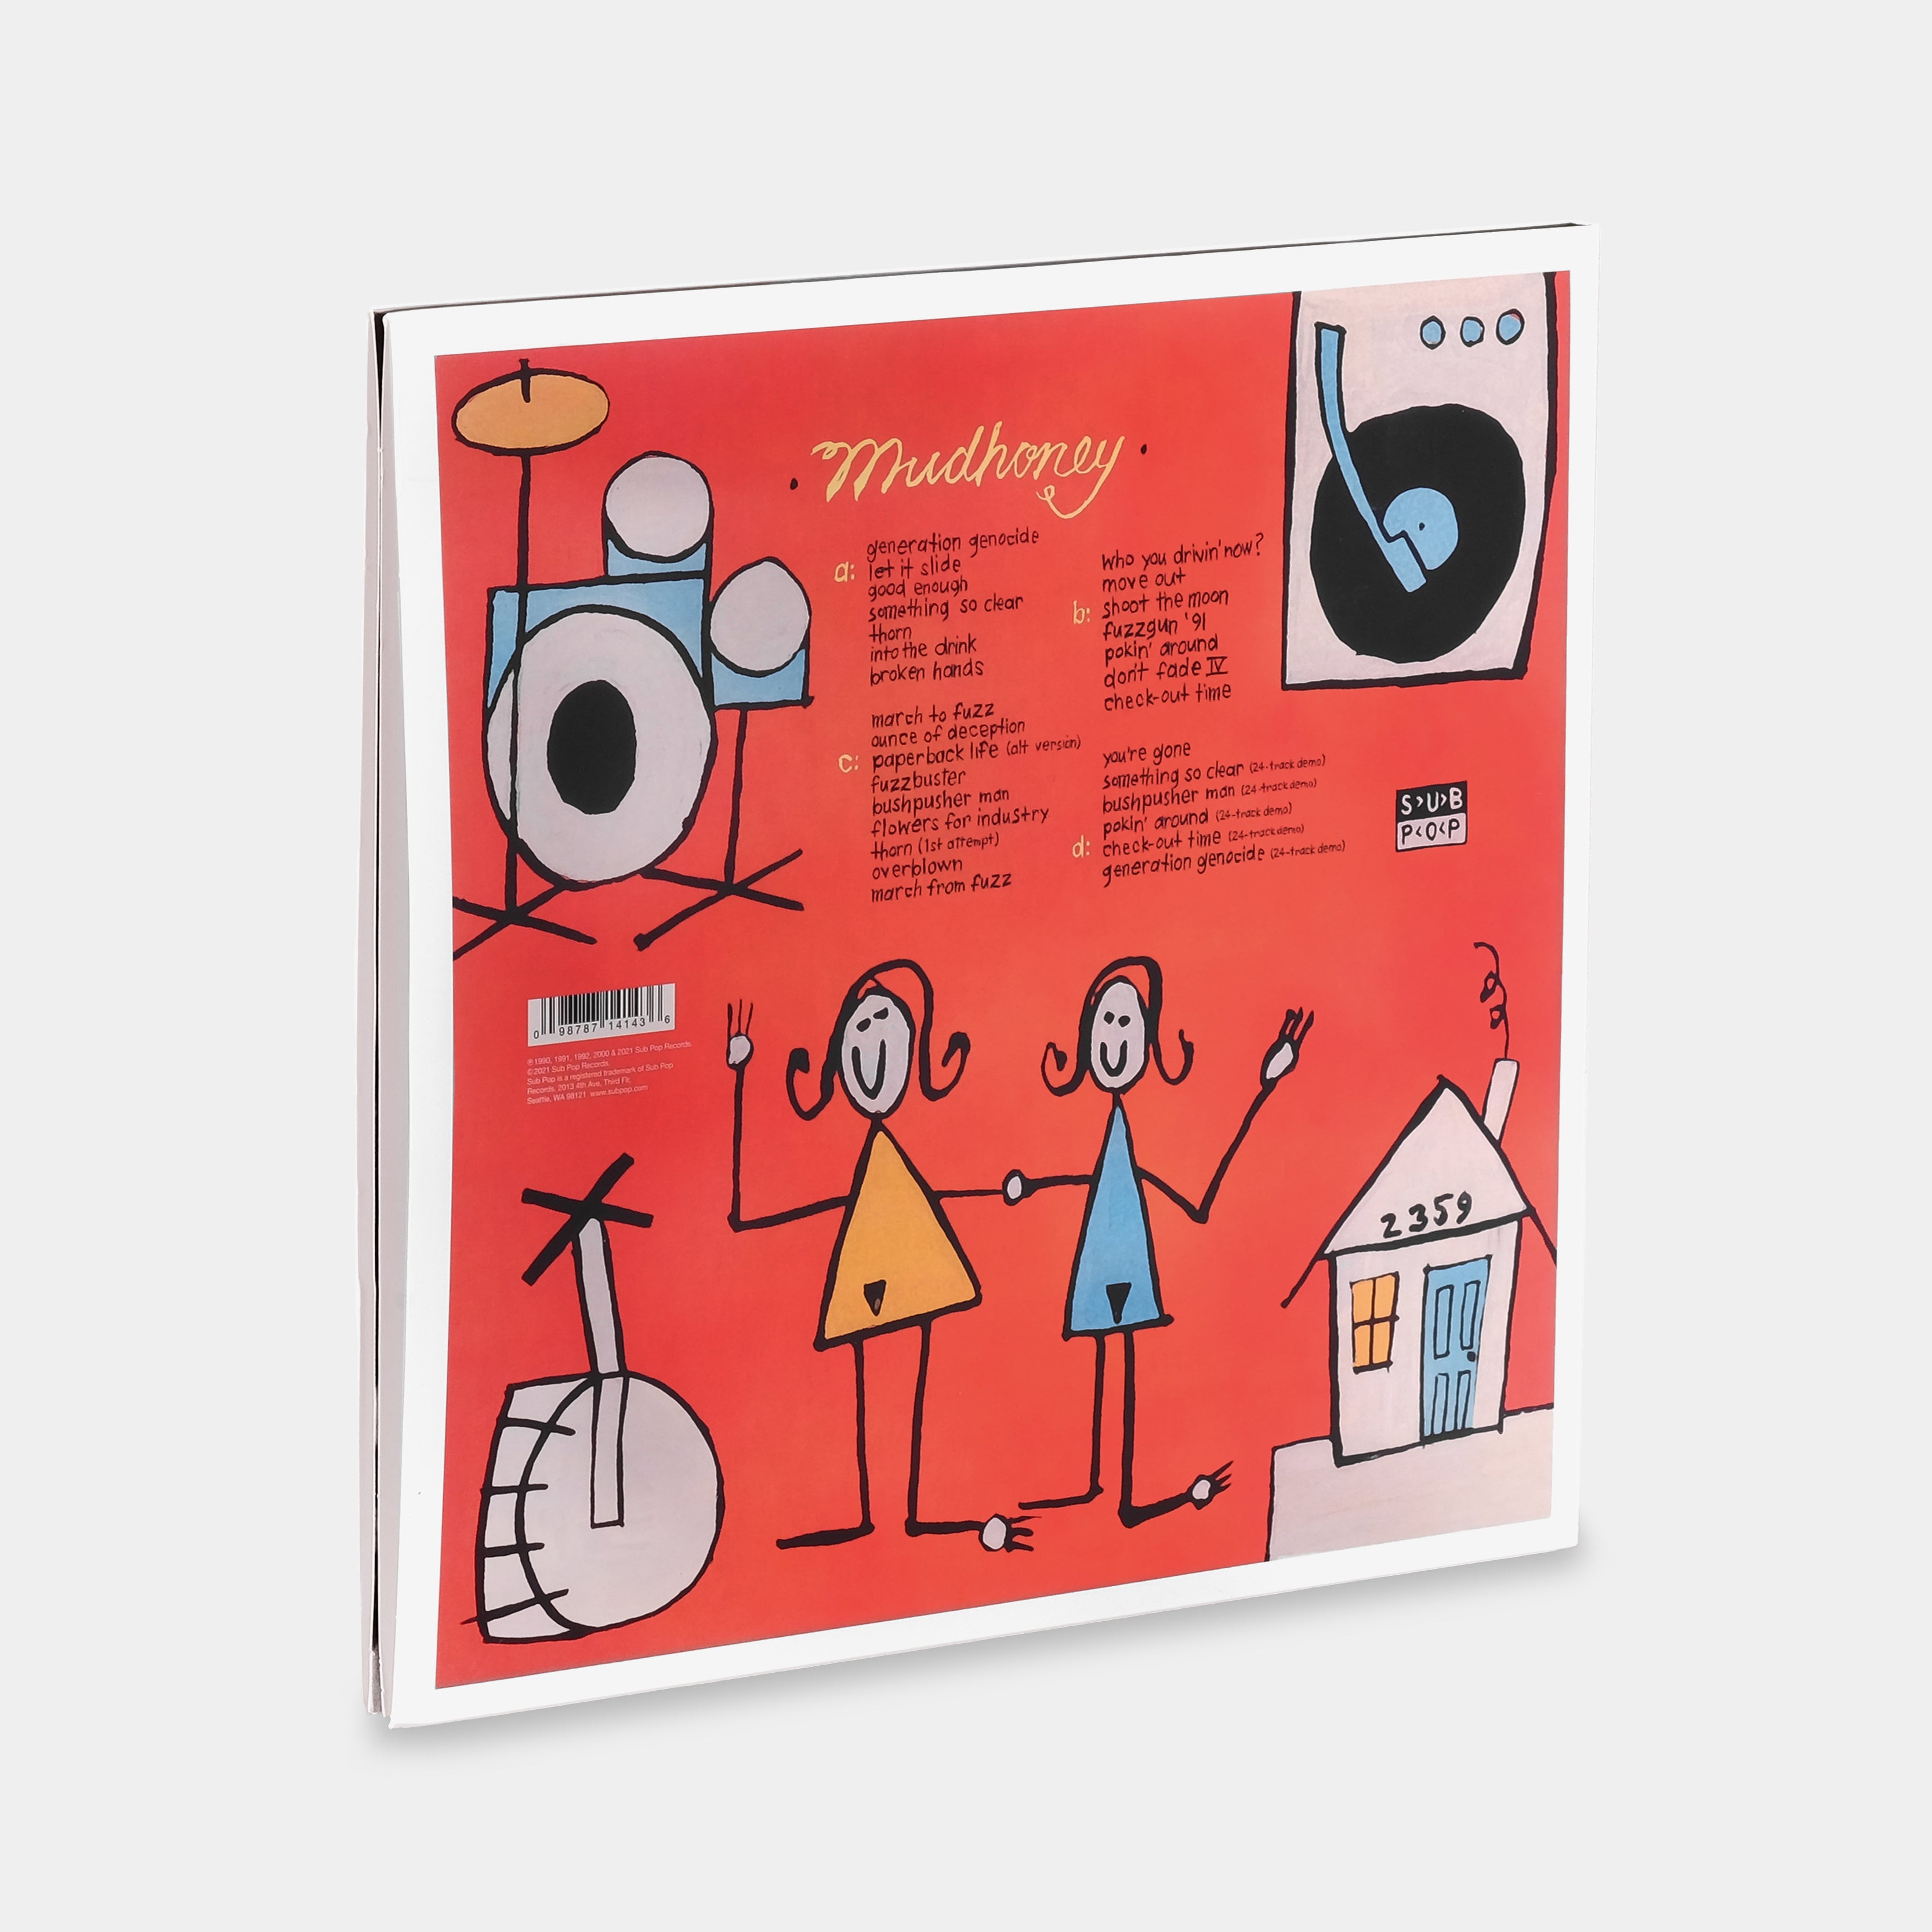 Mudhoney - Every Good Boy Deserves Fudge 2xLP Blue & Red Vinyl Record